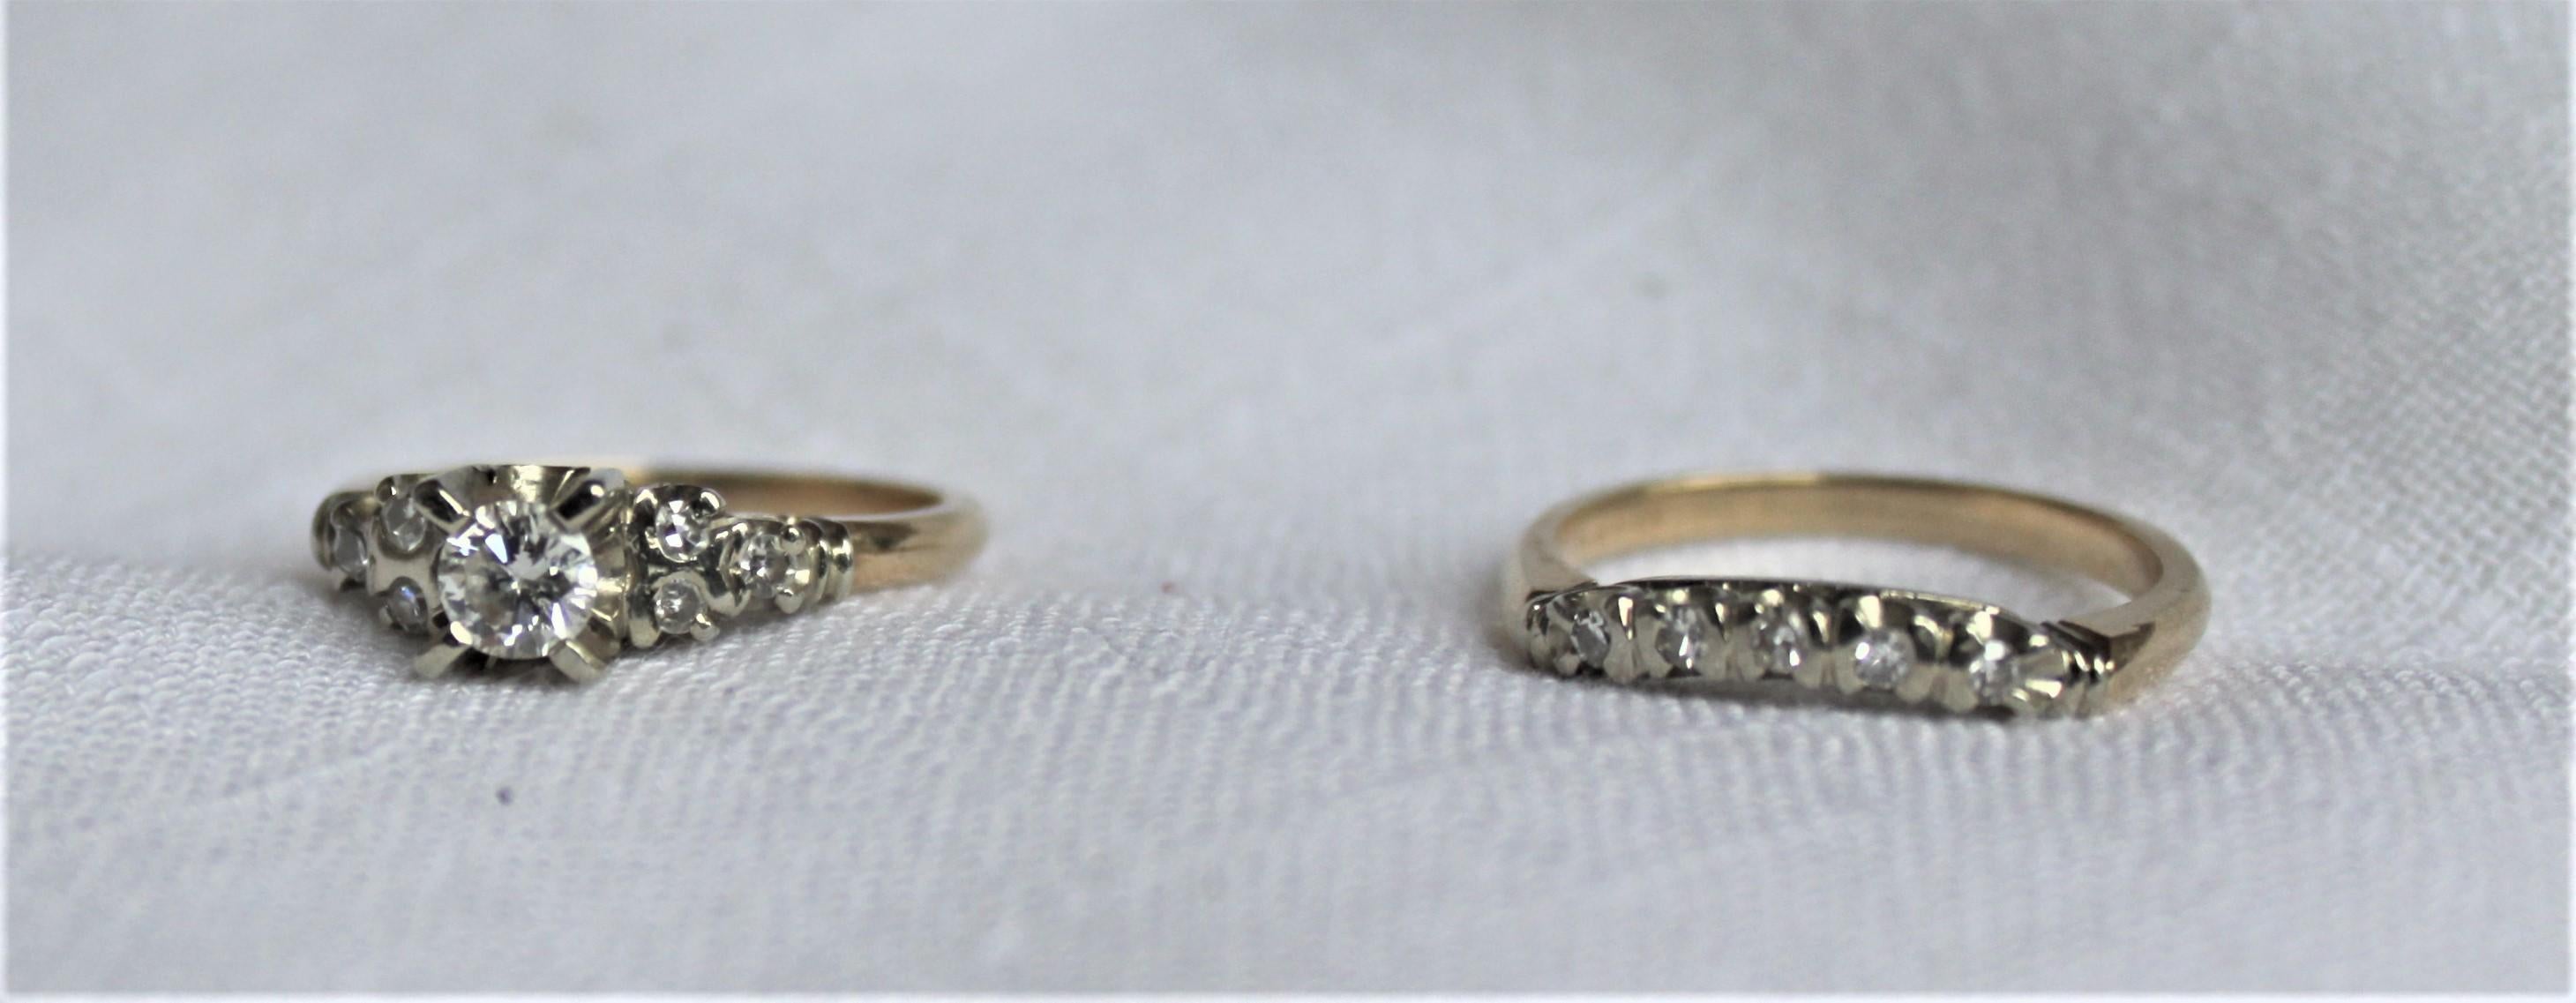 Hand-Crafted Mid Century Ladies 14-Karat Yellow & White Gold & Diamond Wedding Ring Set